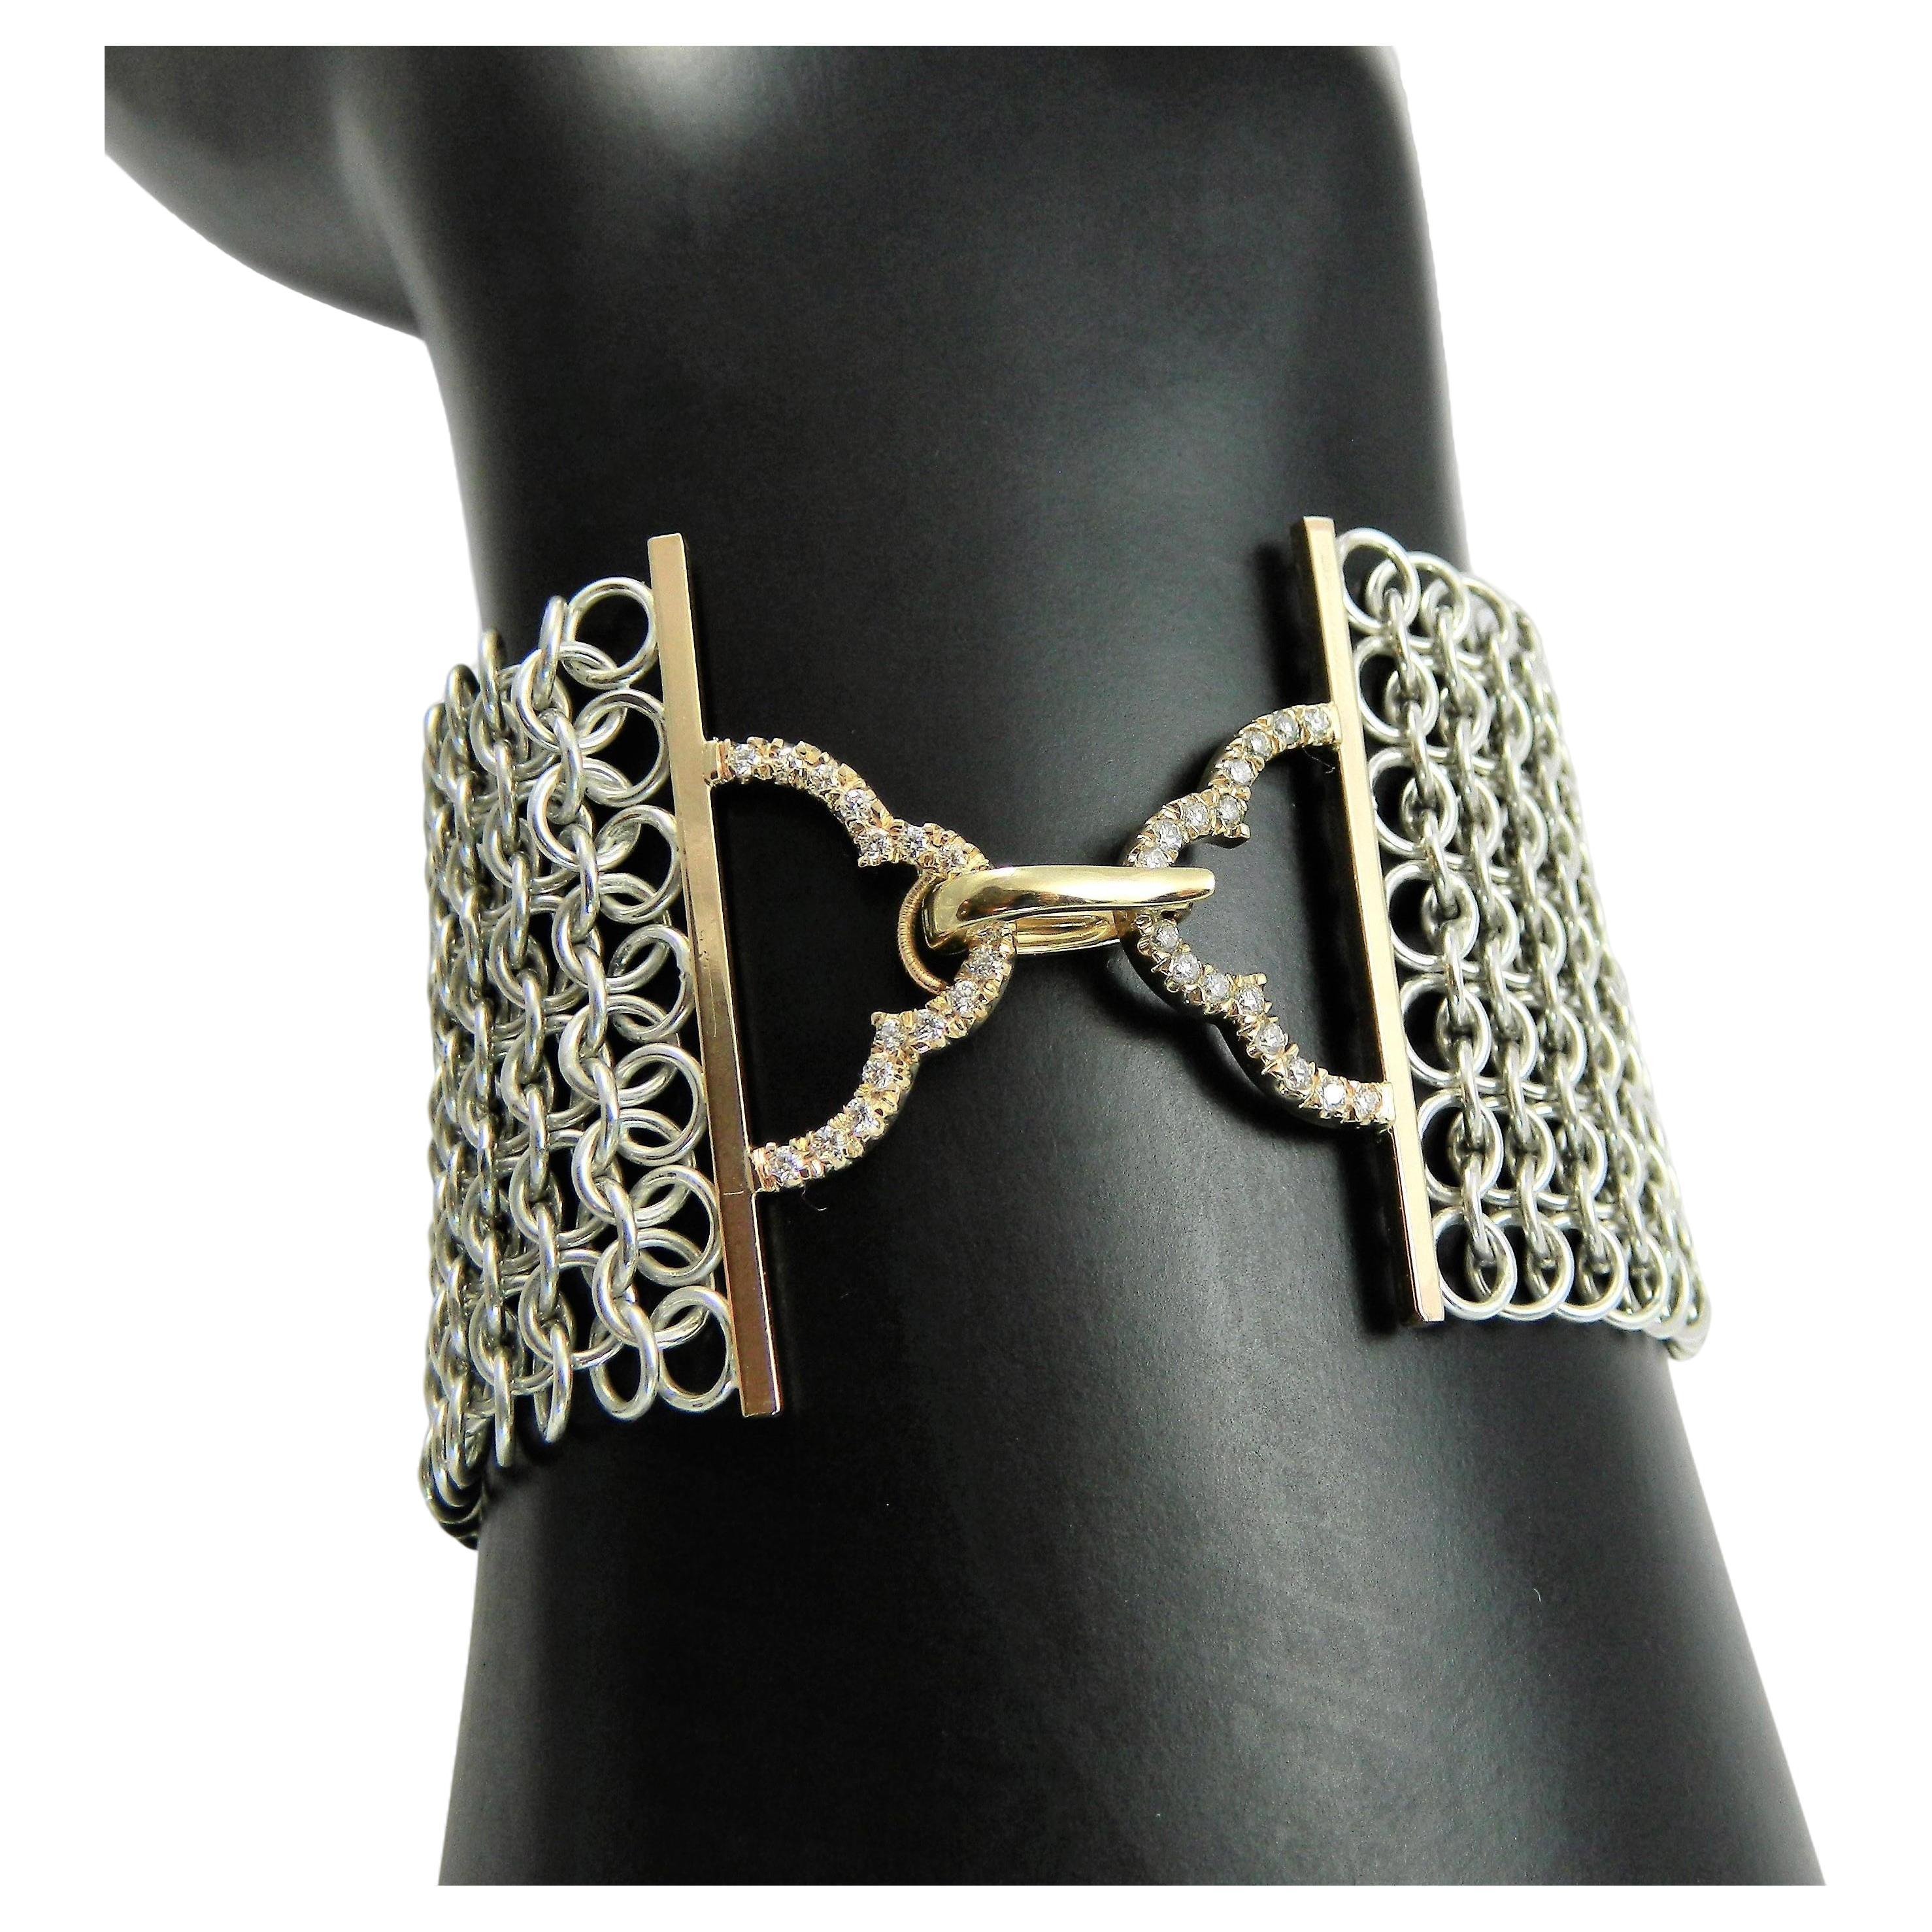 Alison Nagasue AKN Design Cuff Bracelets